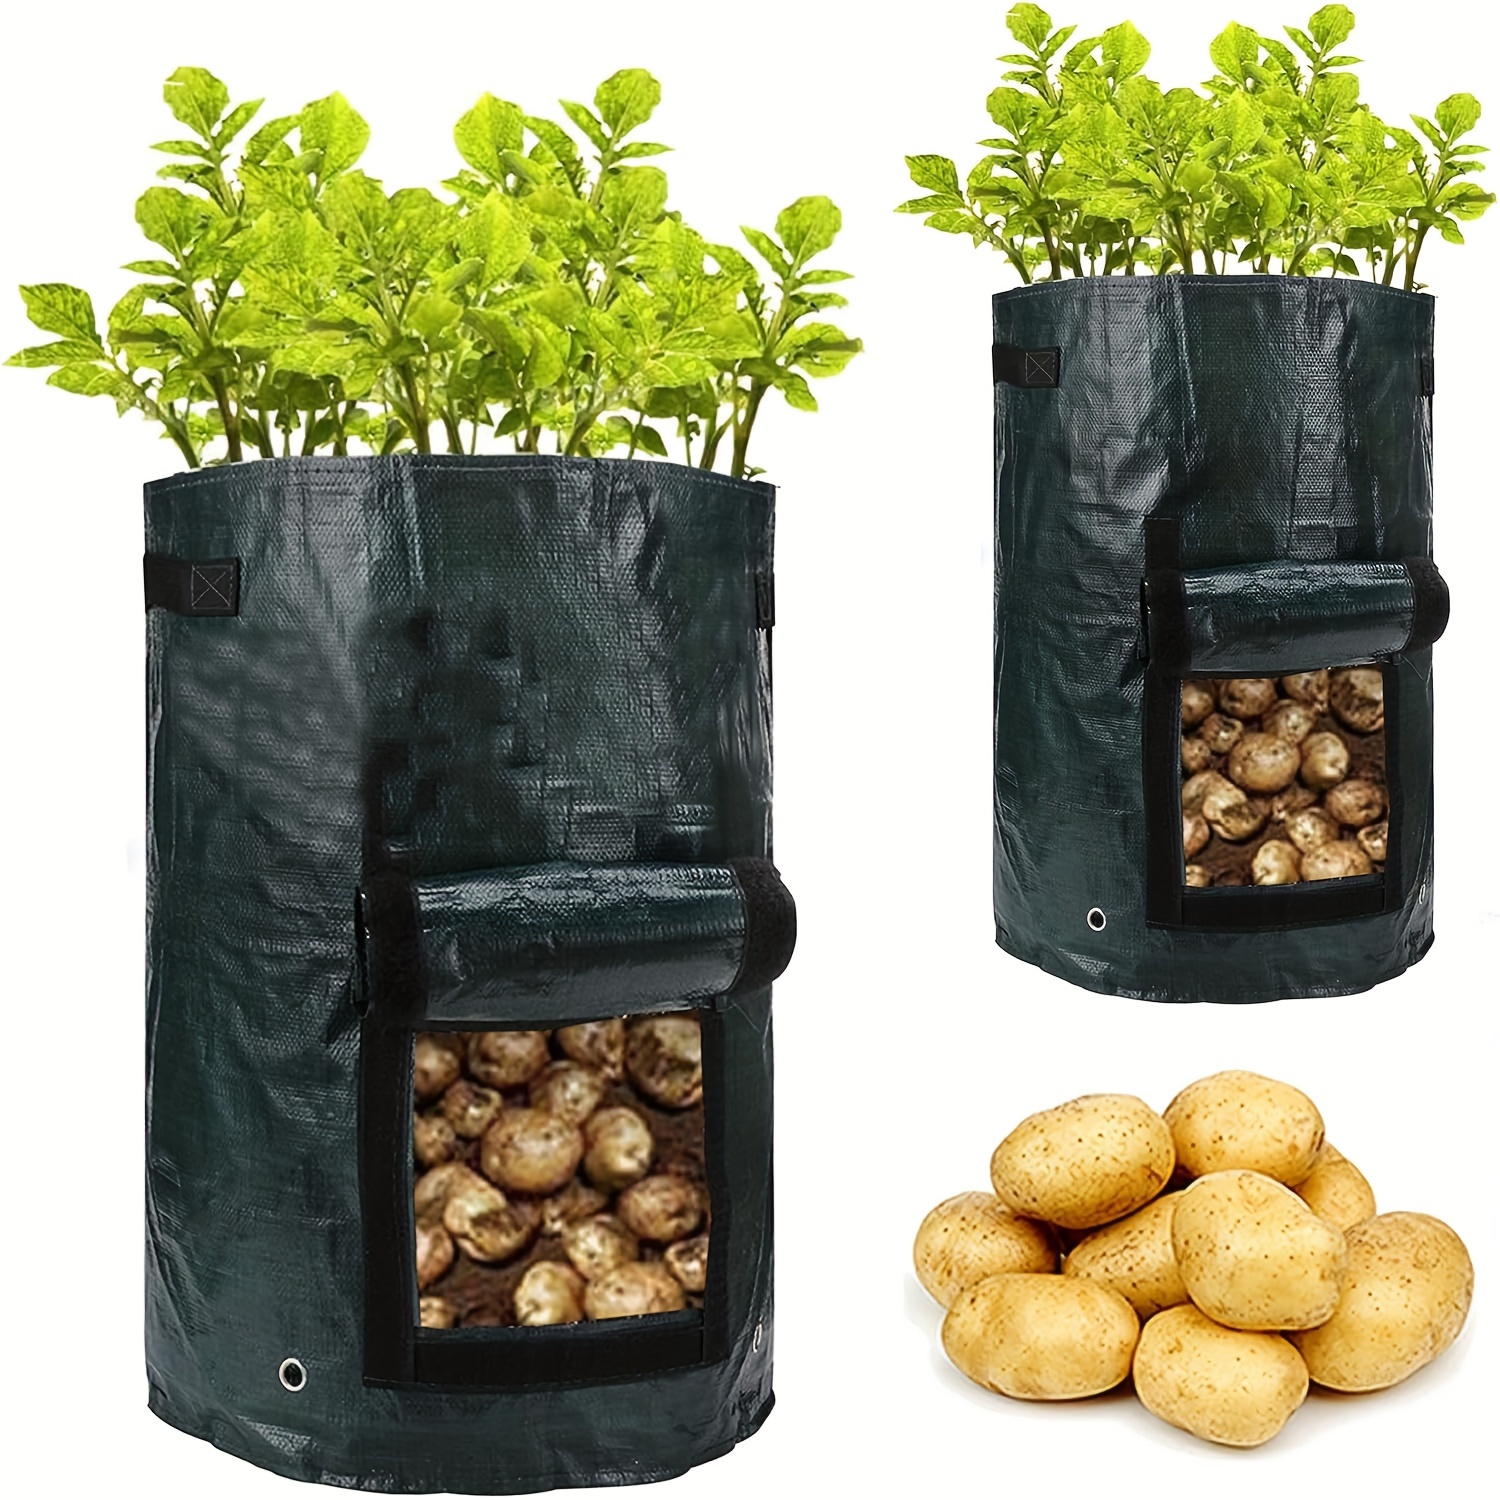 

2pcs 10 Gallon Garden Potato Grow Bags, Non-woven Fabric Carrot Planting Pots With Flap, Durable Indoor & Outdoor Vegetable Planter Containers